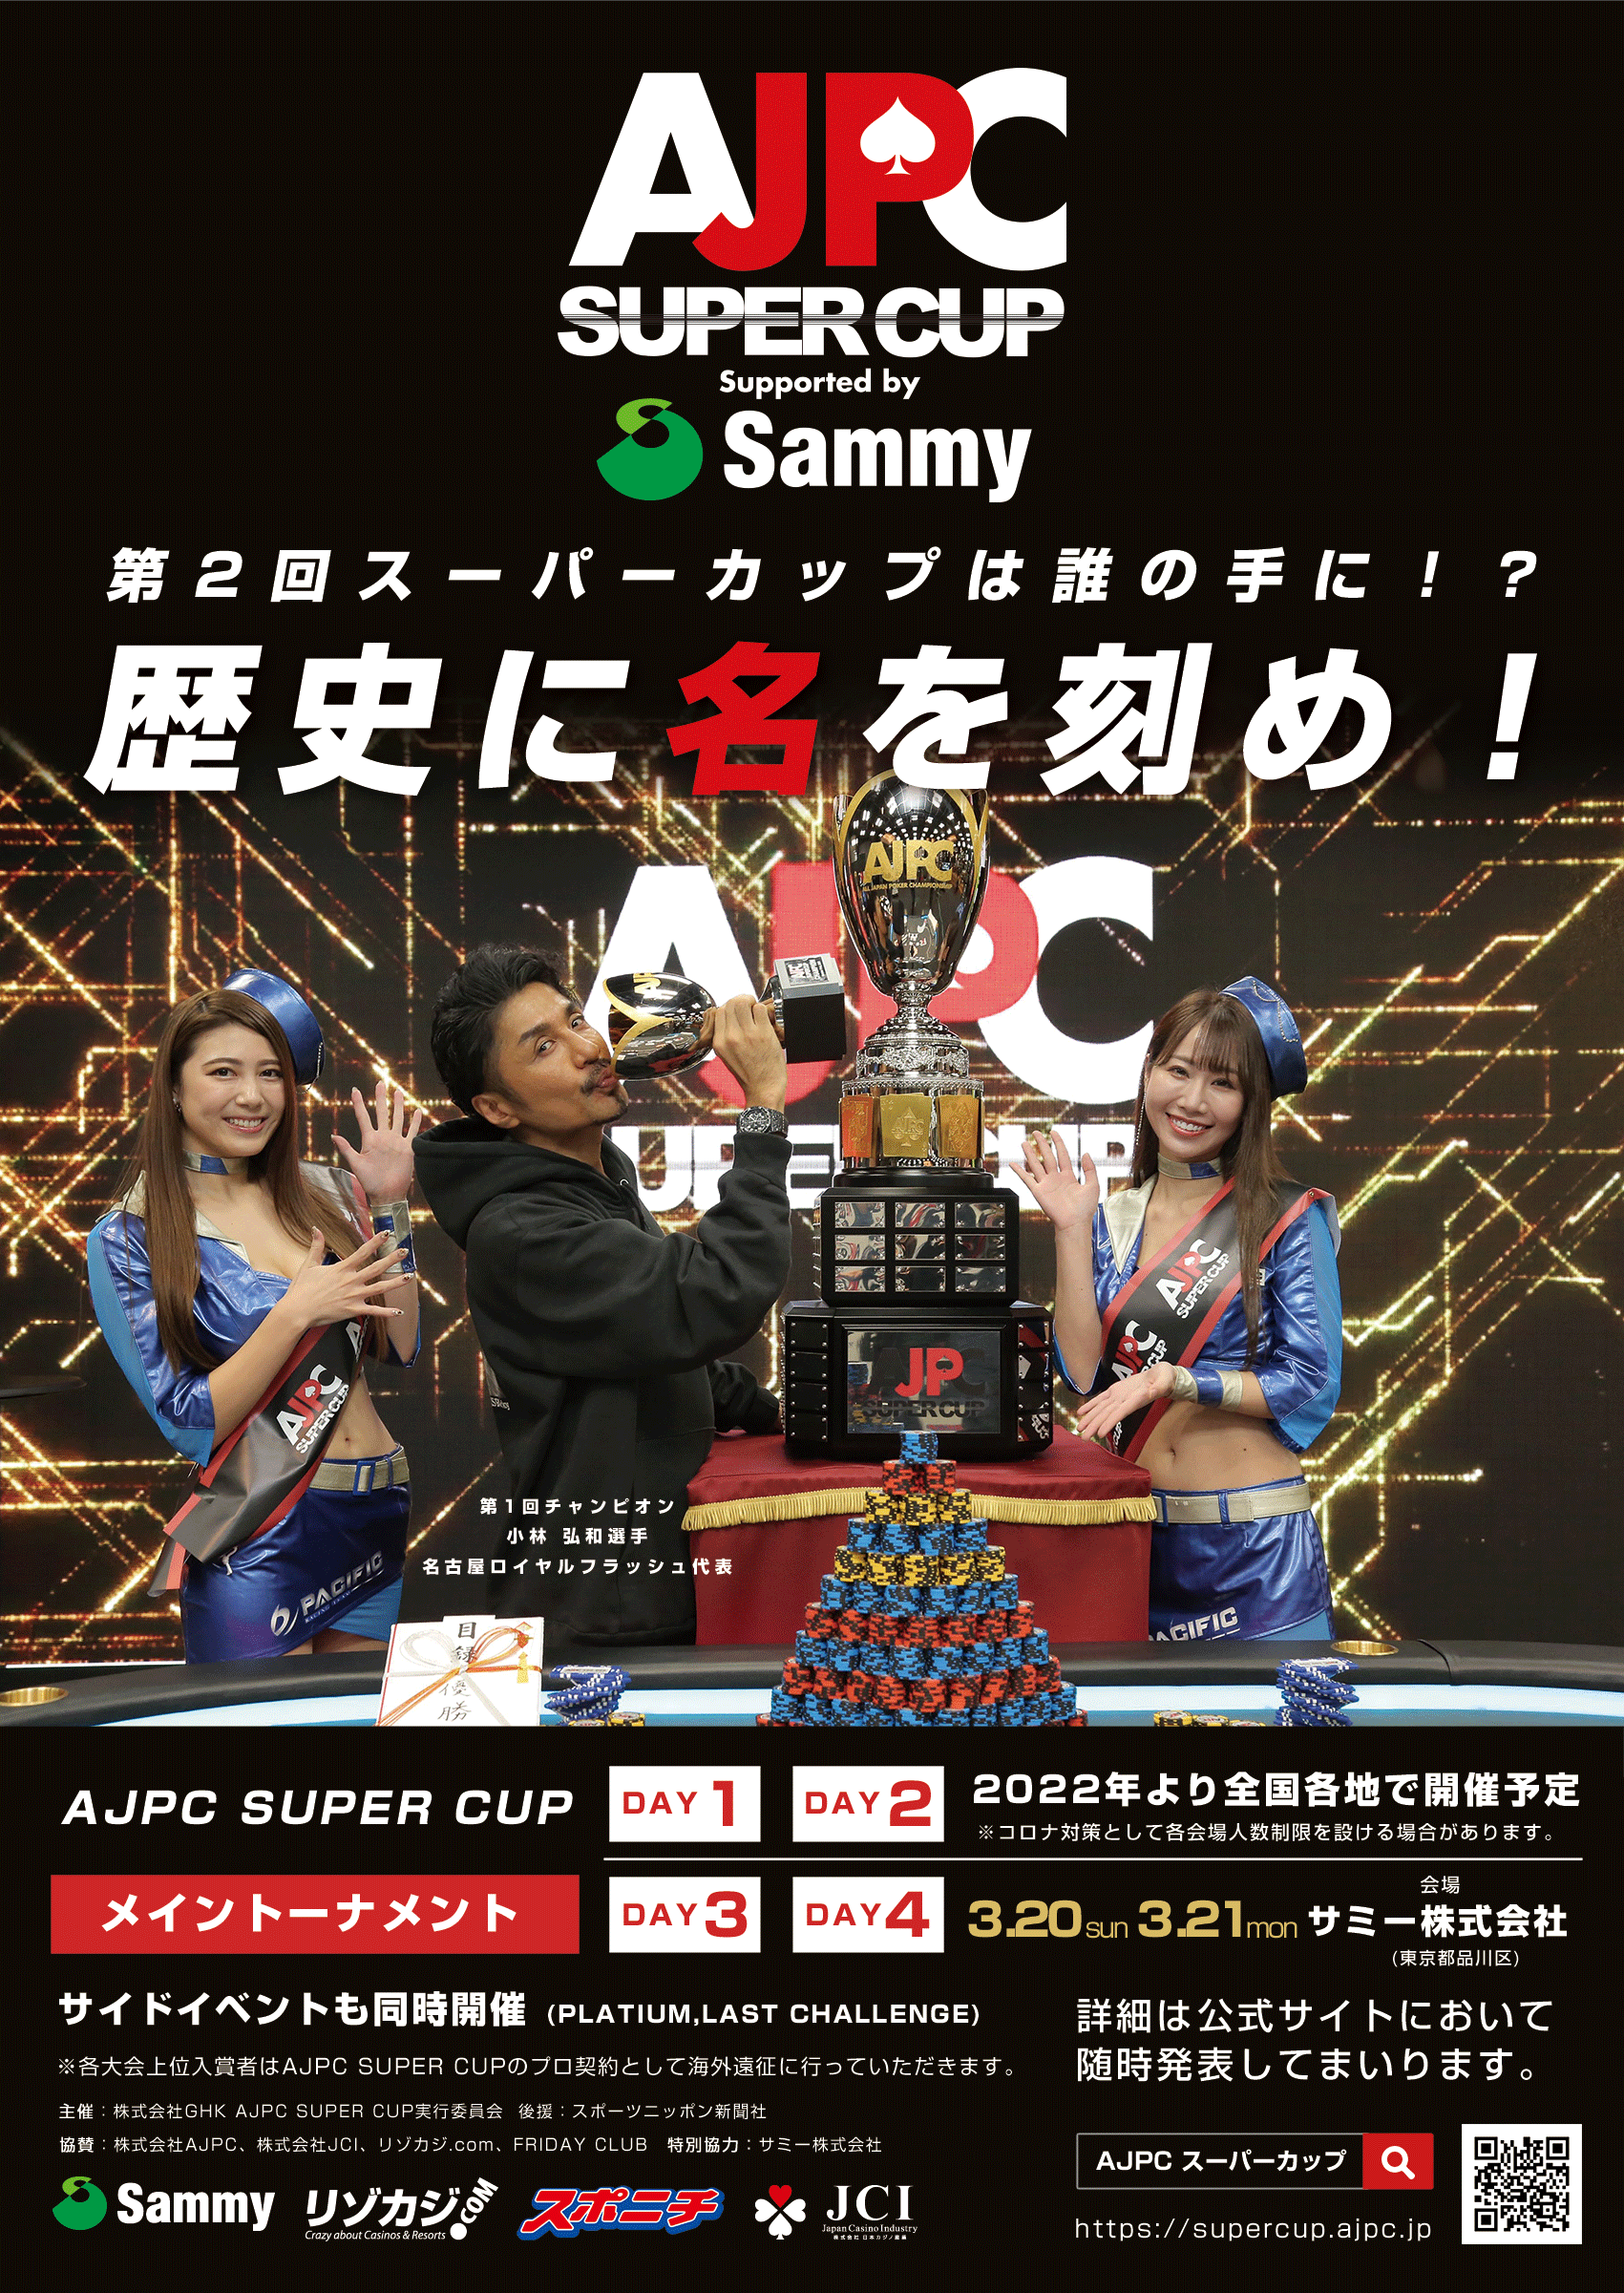 AJPC SUPER CUP【2+1枠】& JEWEL SERIES